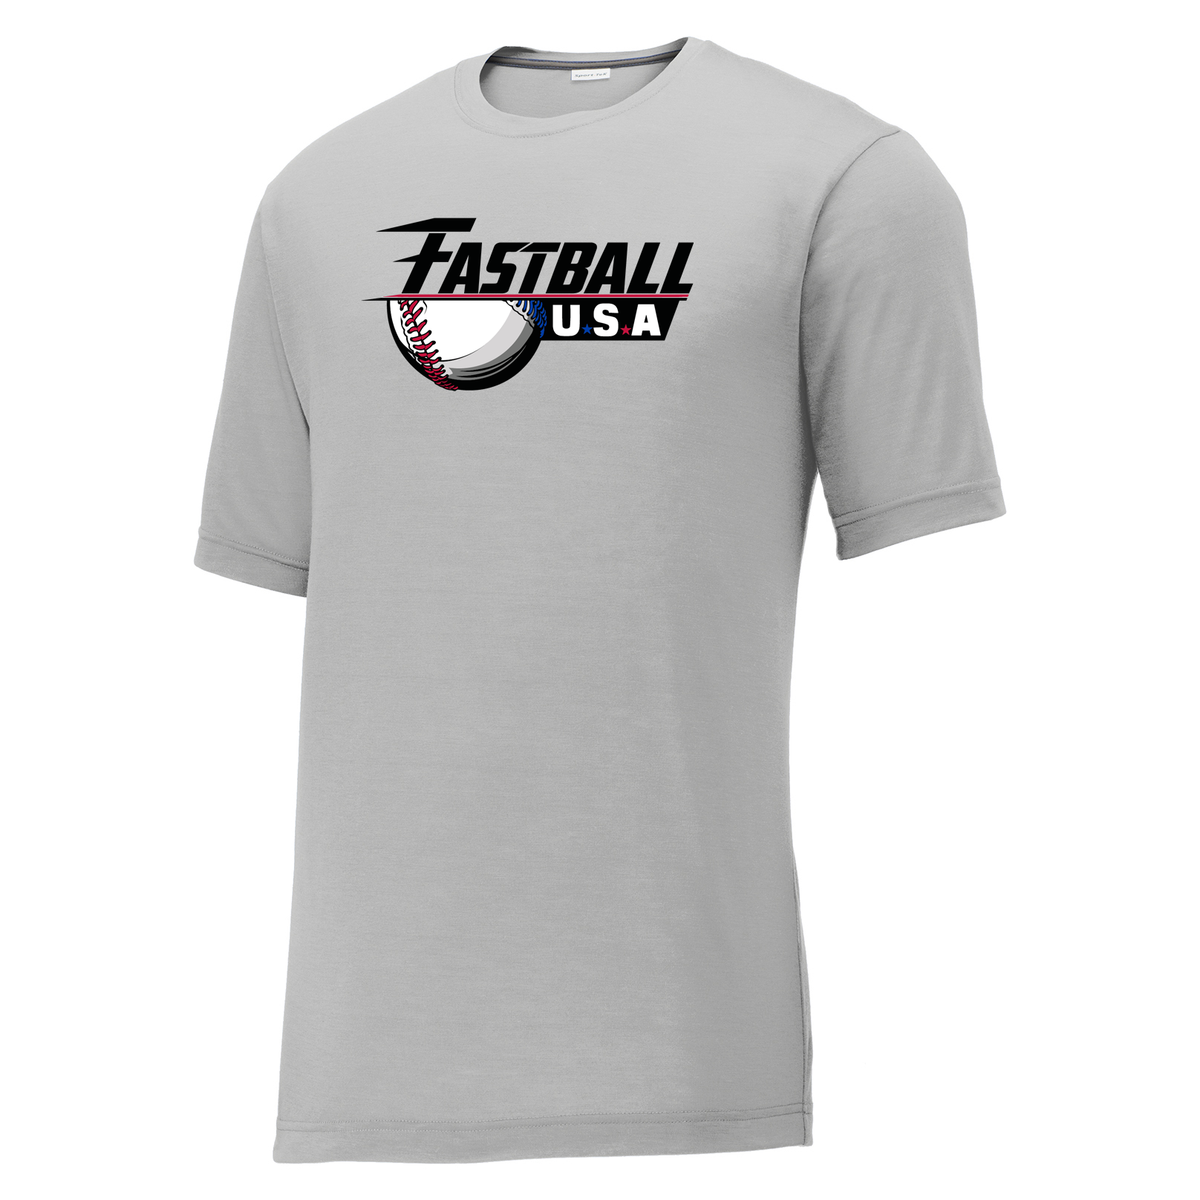 Fastball USA Baseball CottonTouch Performance T-Shirt